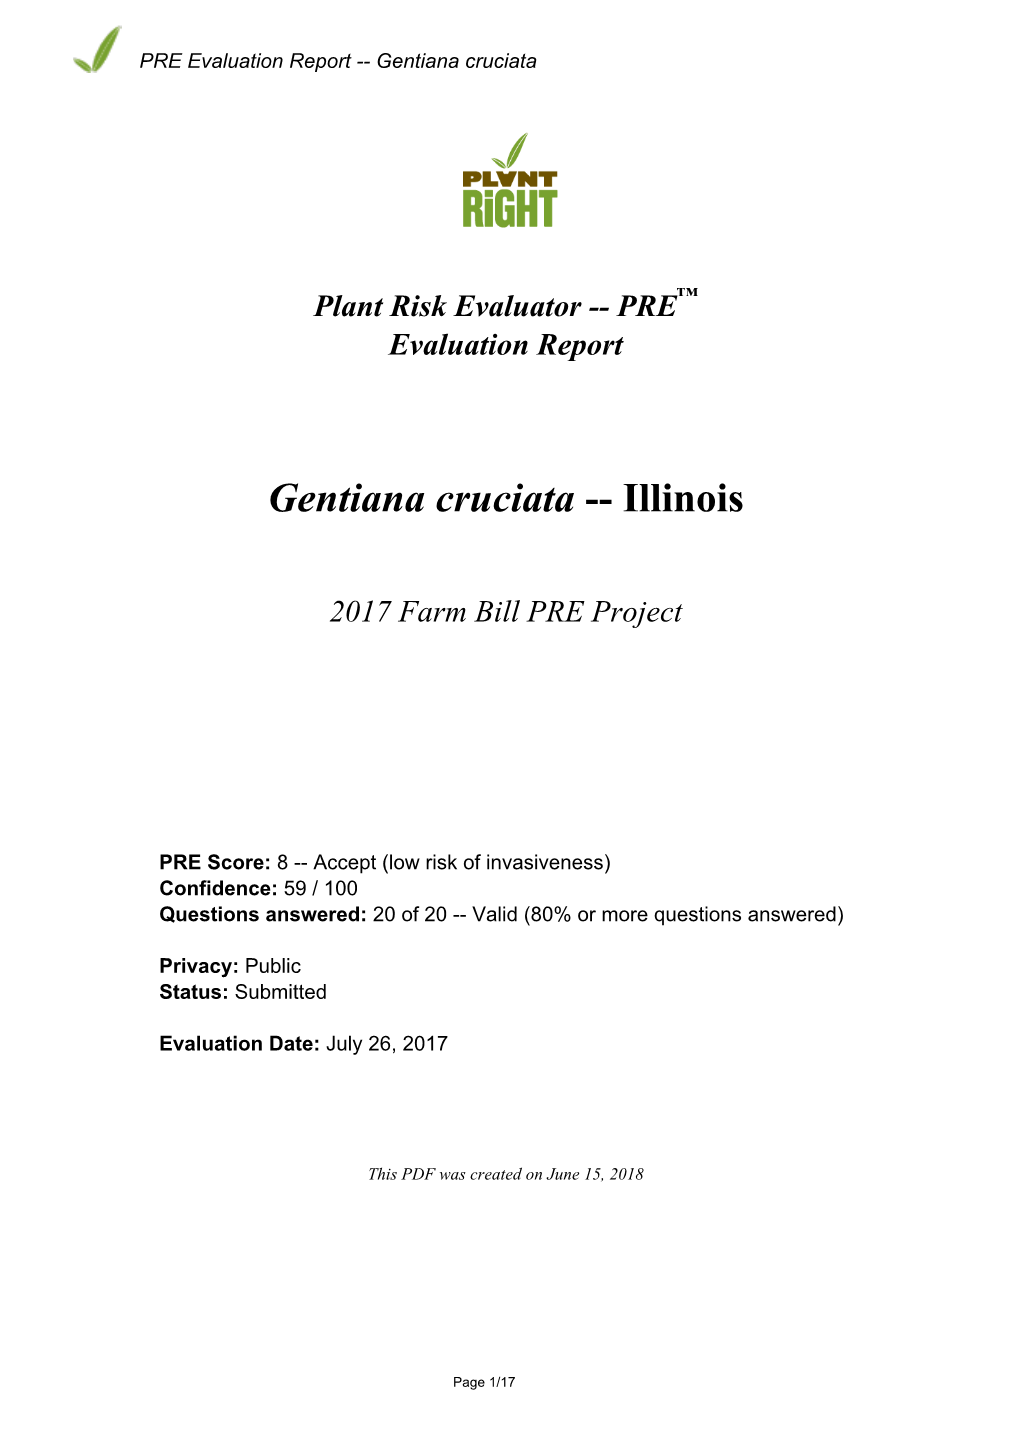 PRE Evaluation Report for Gentiana Cruciata